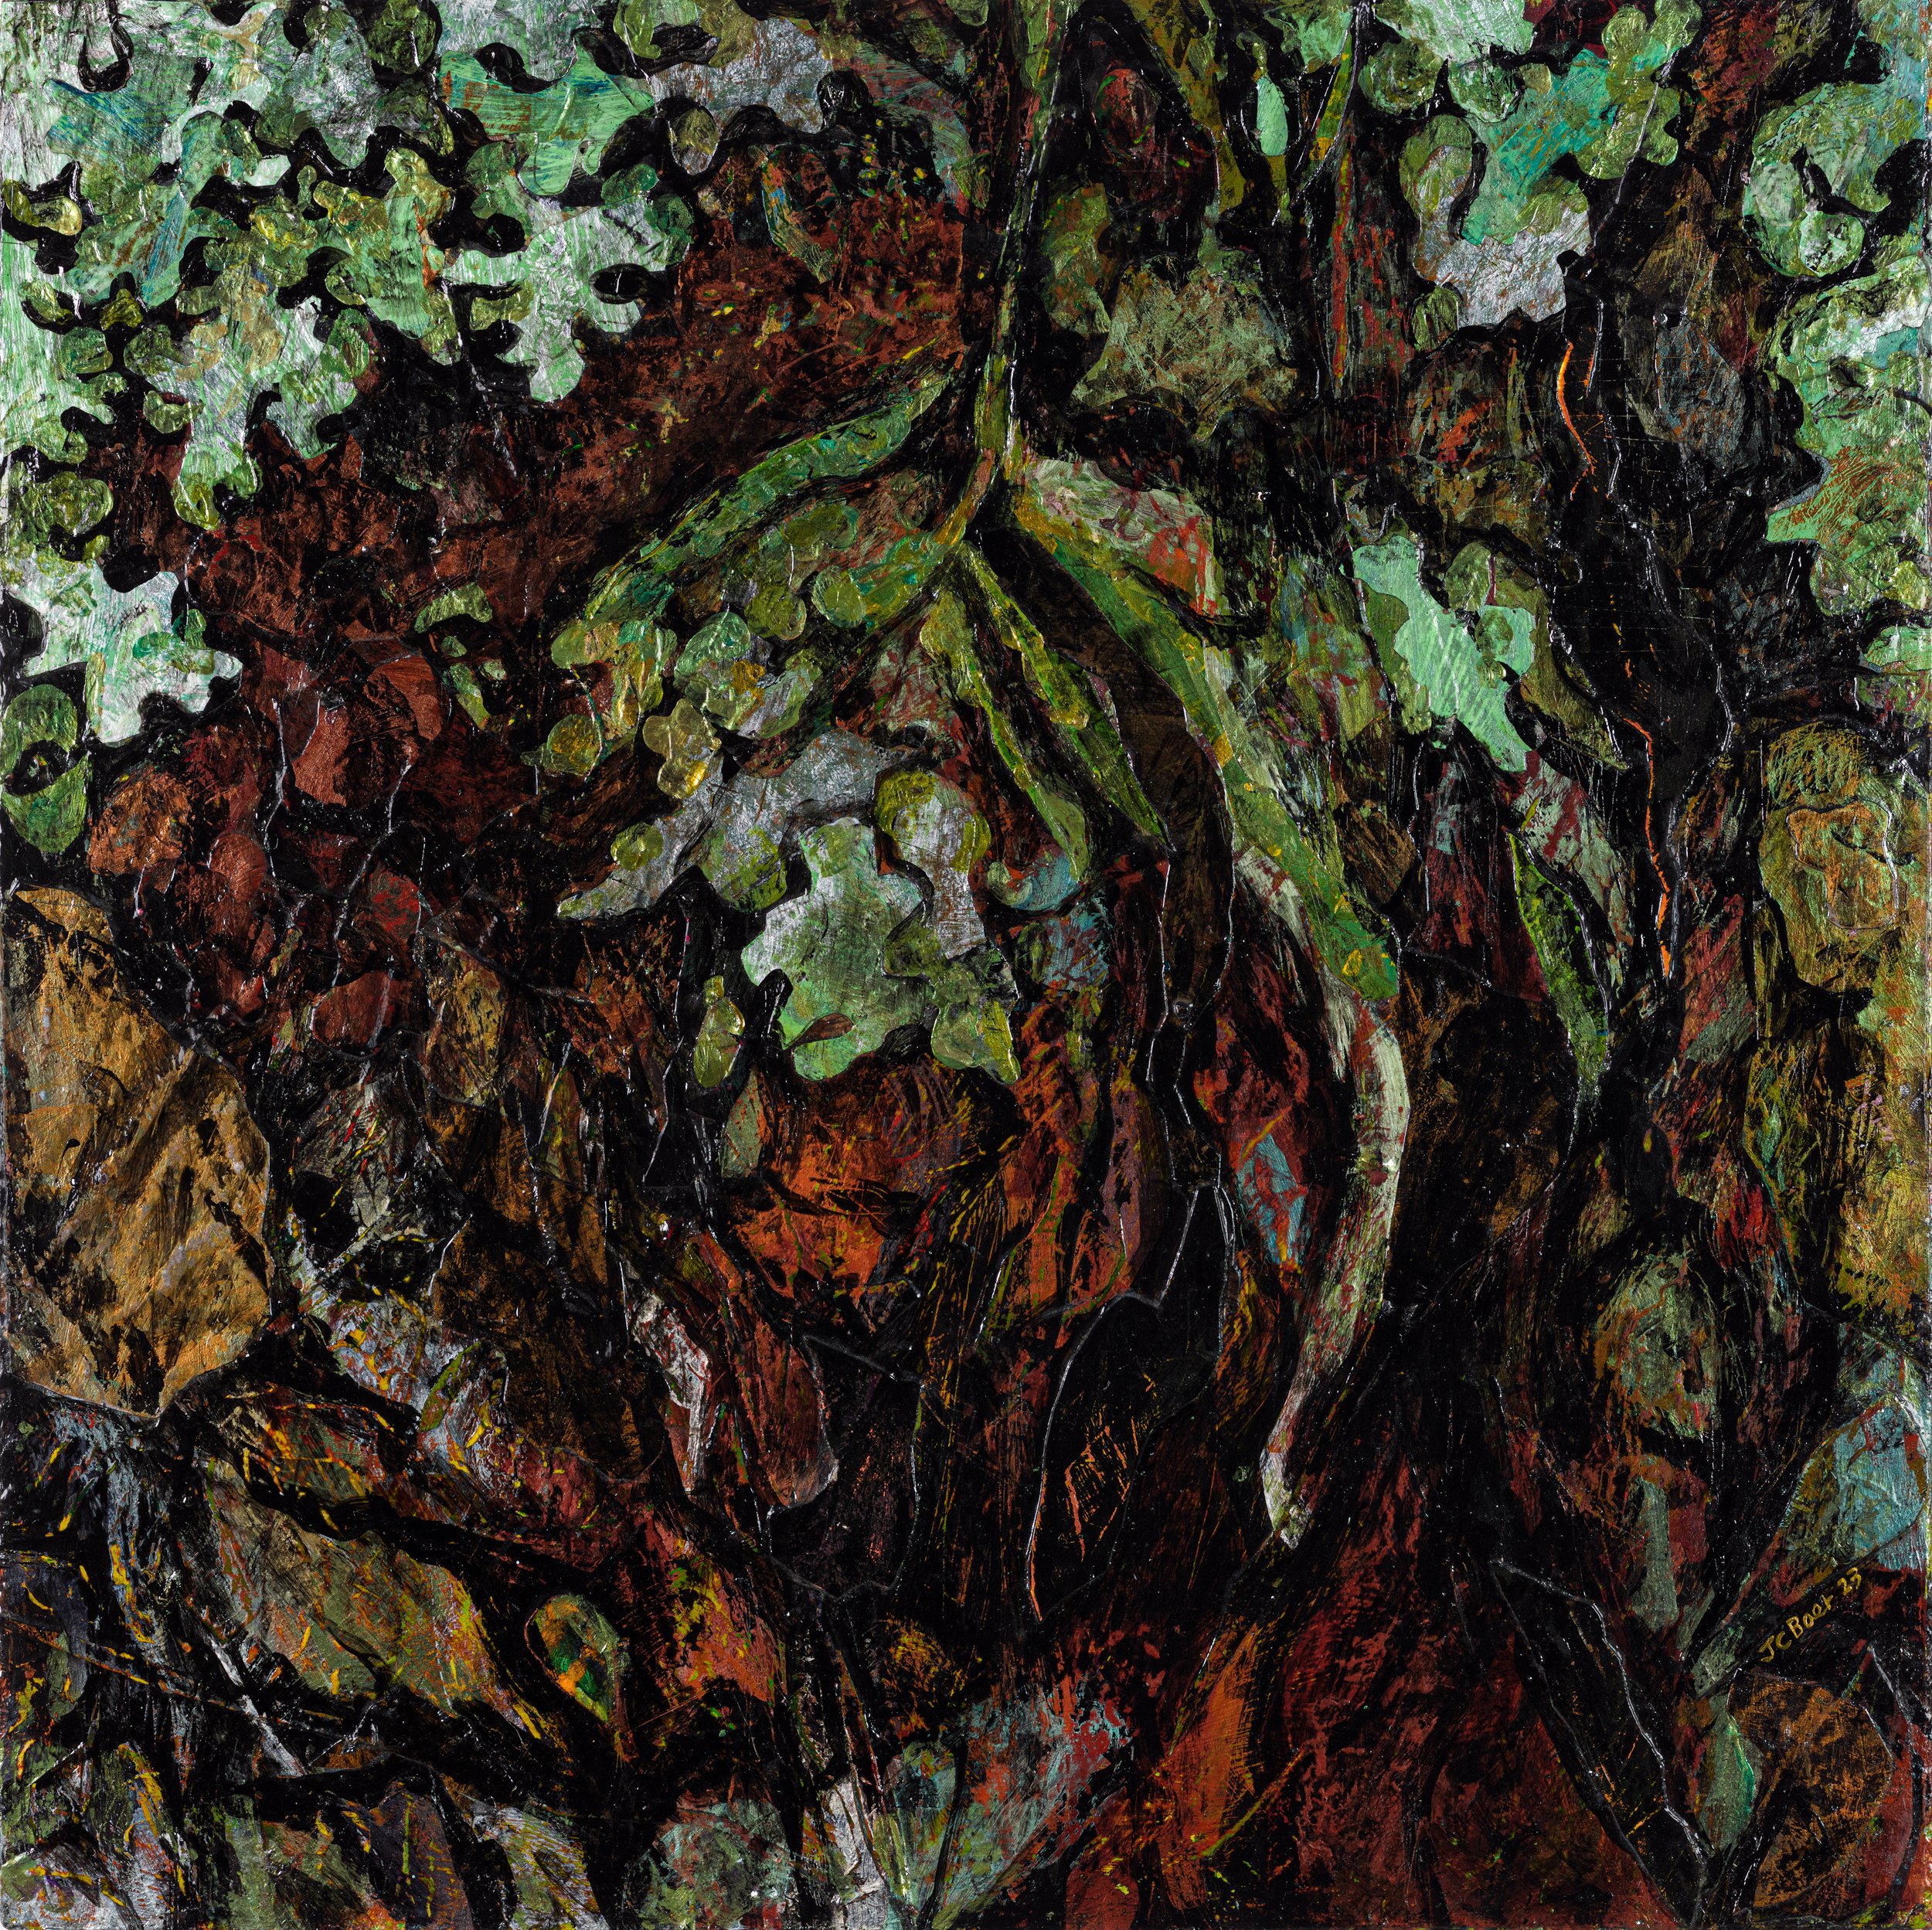 Black Cherry (Prunus serotina), 2023, Mixed media on wood panel, 24x24”, $1600